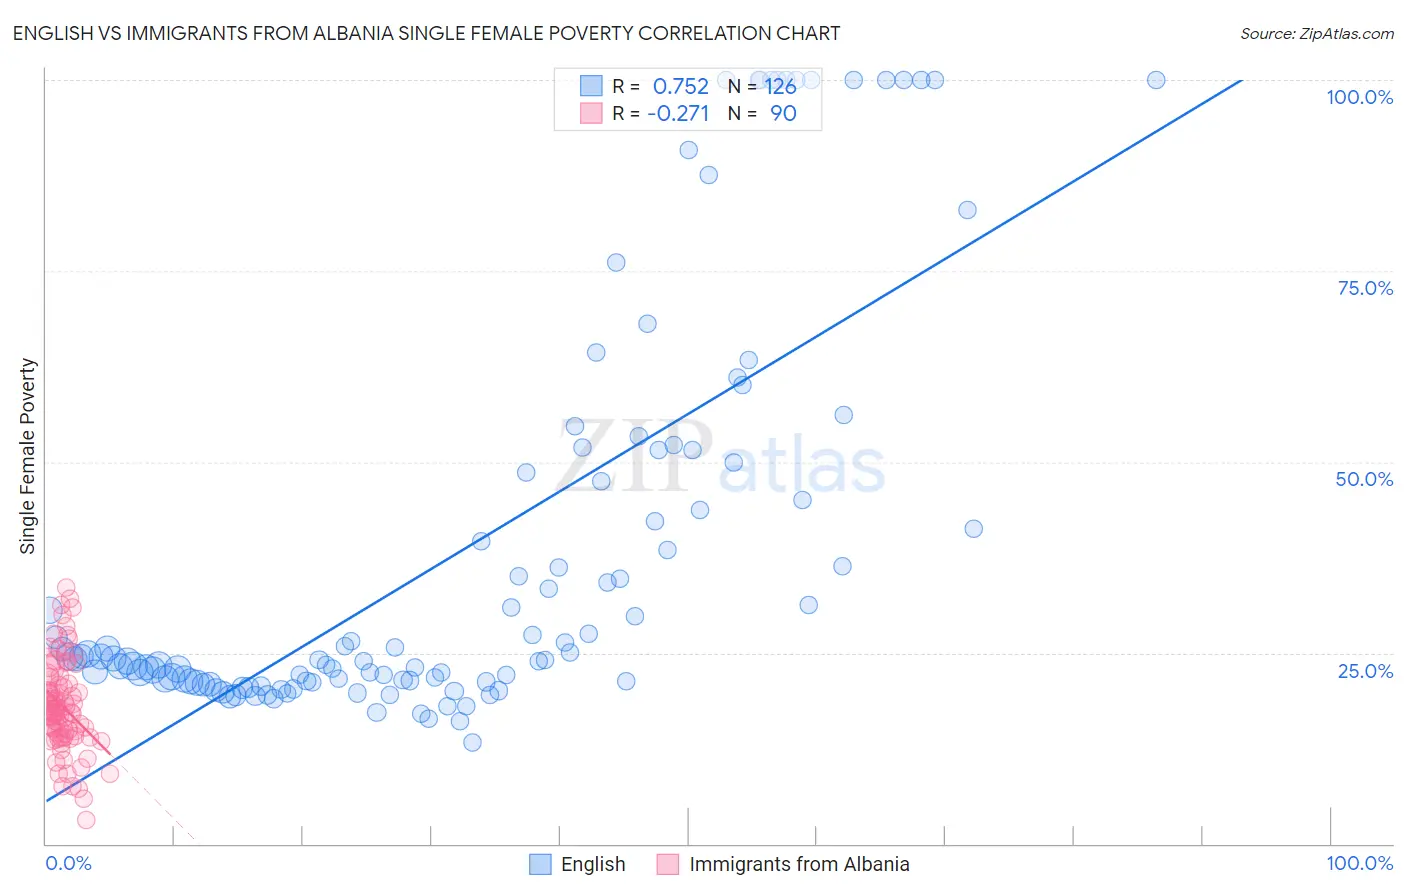 English vs Immigrants from Albania Single Female Poverty